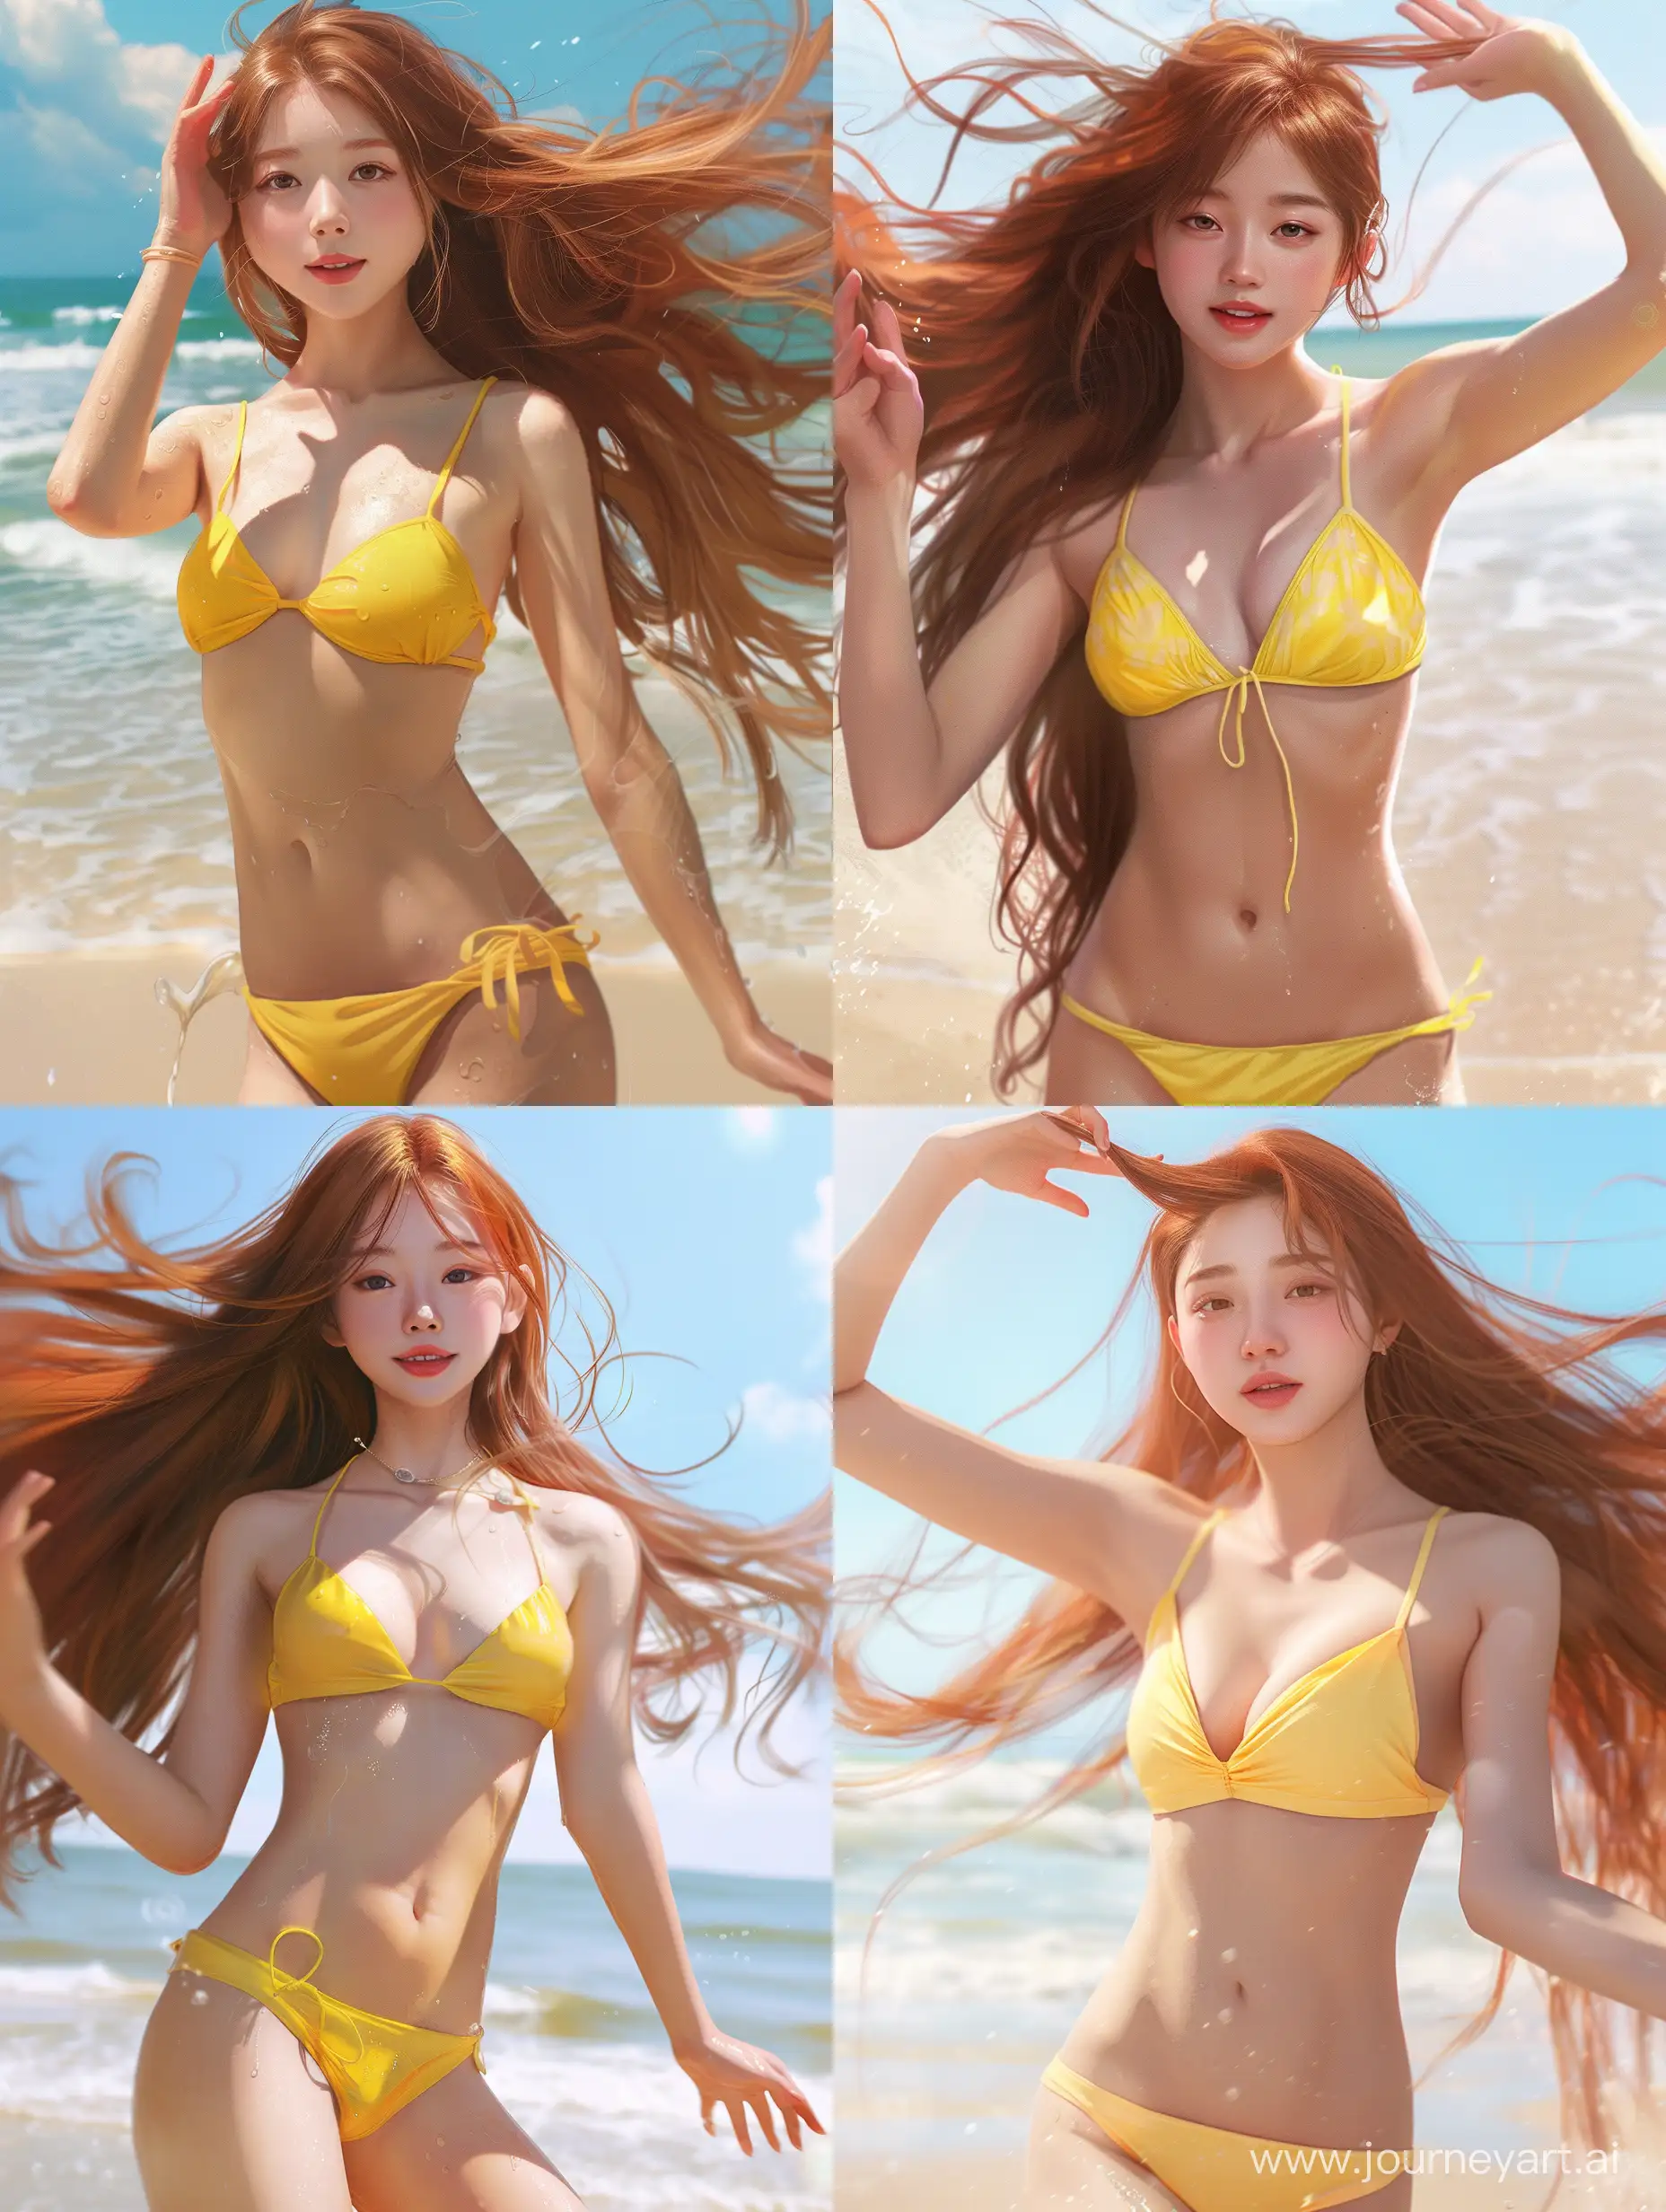 realistic, detailed, 1 Asian girl,  wearing yellow bikini, long reddish brown hair, flying randomly, hair detail, hand raised to hair, standing on sunny beach